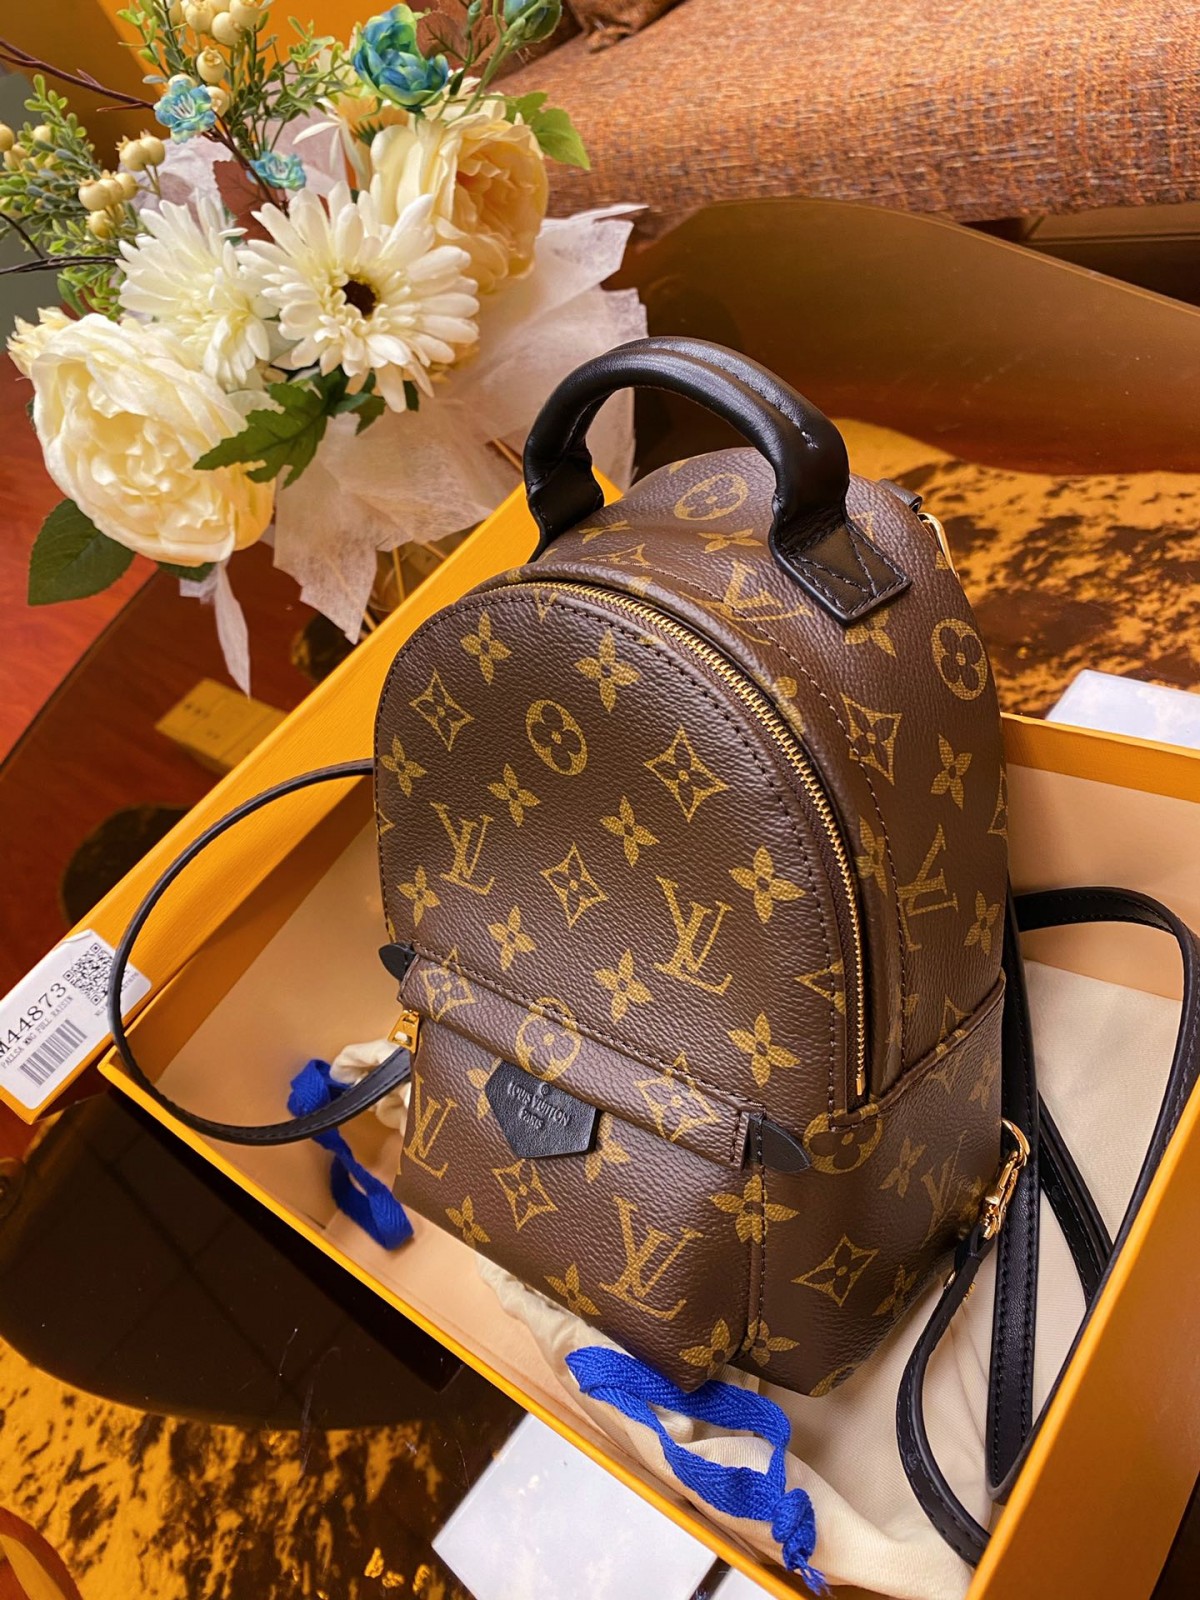 Louis Vuitton mekotla replica replica maikutlo (2022 ntjhafatswa) - Best Quality Fake Louis Vuitton Bag Online Store, Replica designer bag ru